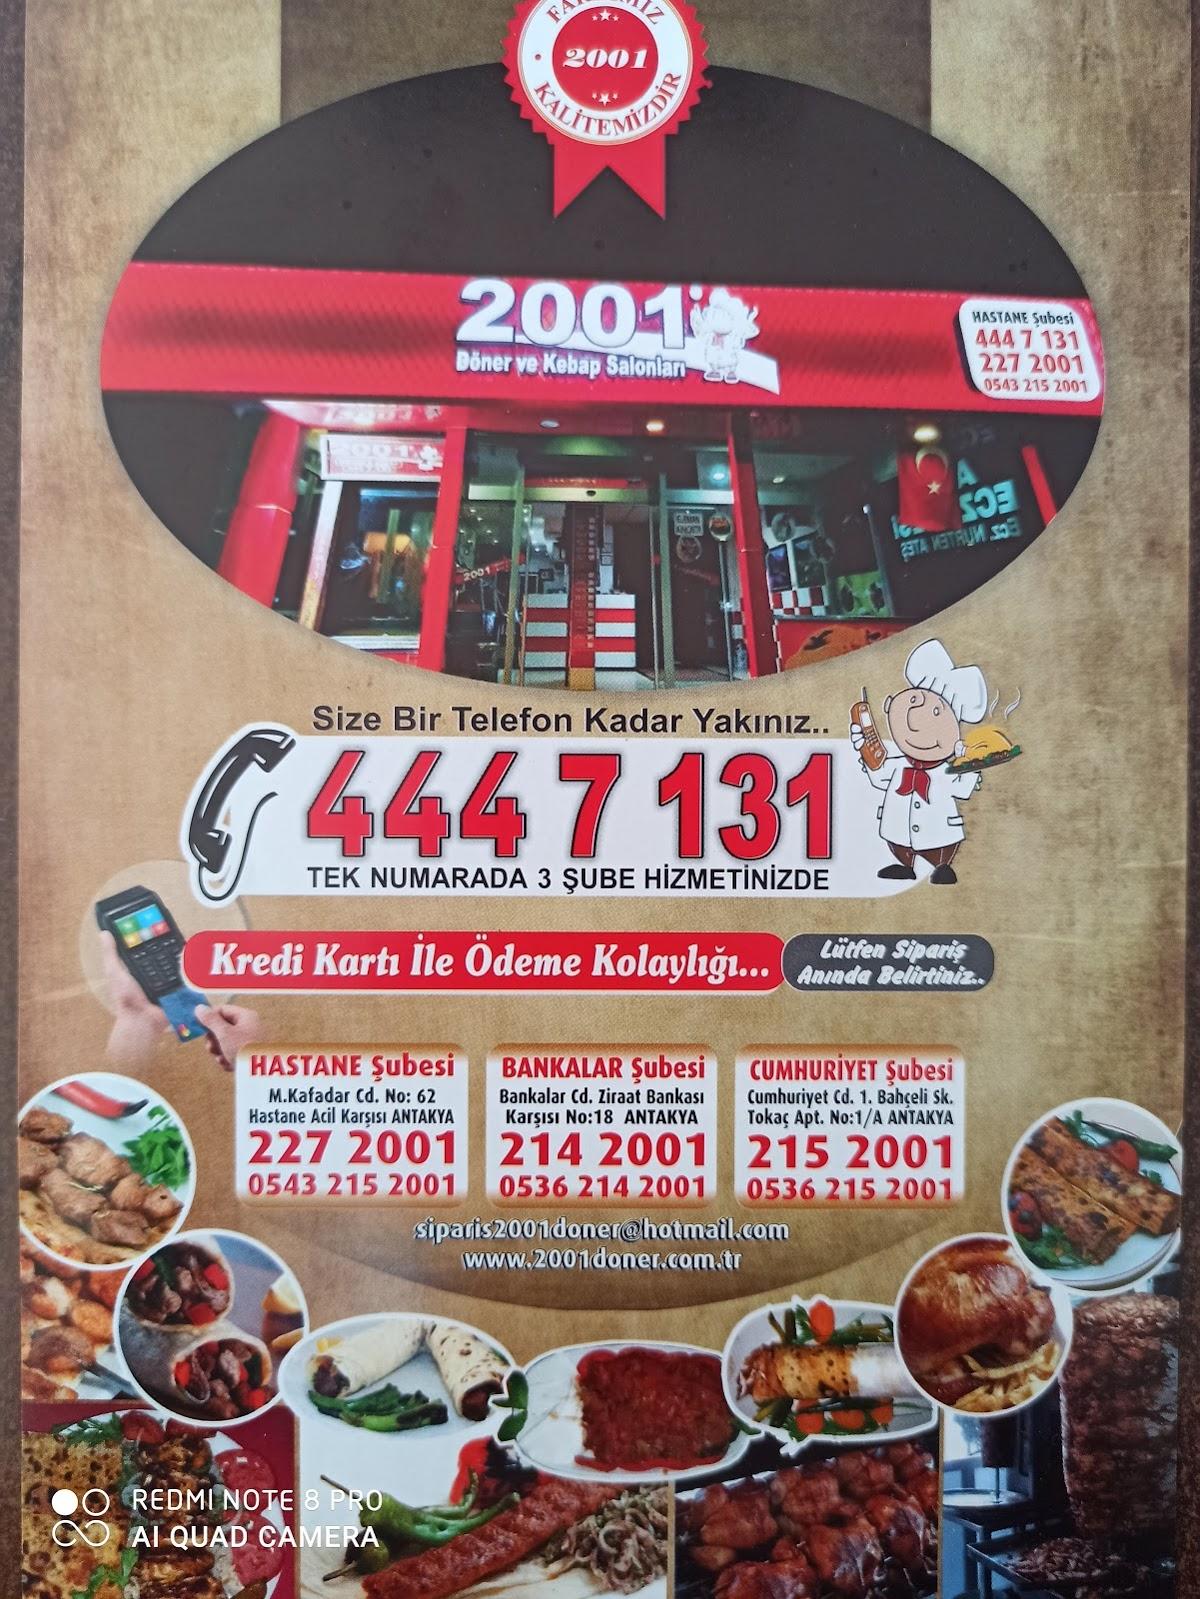 Cafe 2001 Antakya Restaurant Reviews